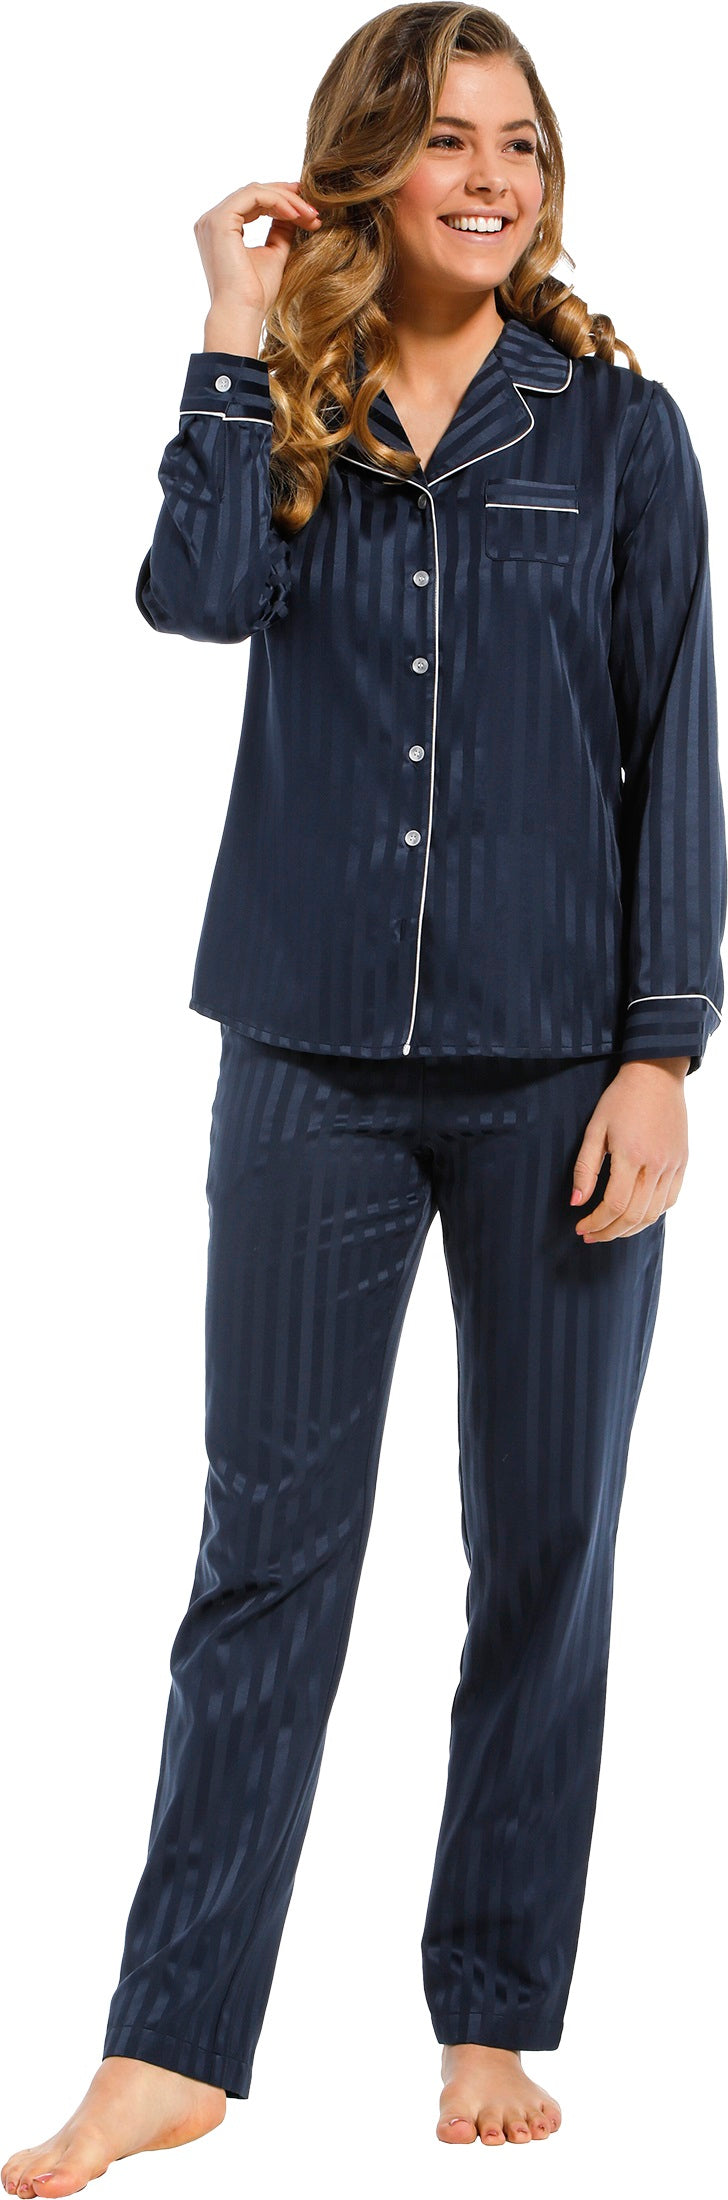 Pastunette Ladies Navy Blue Shadow Stripe Satin Look Pyjama Set 100% Cotton